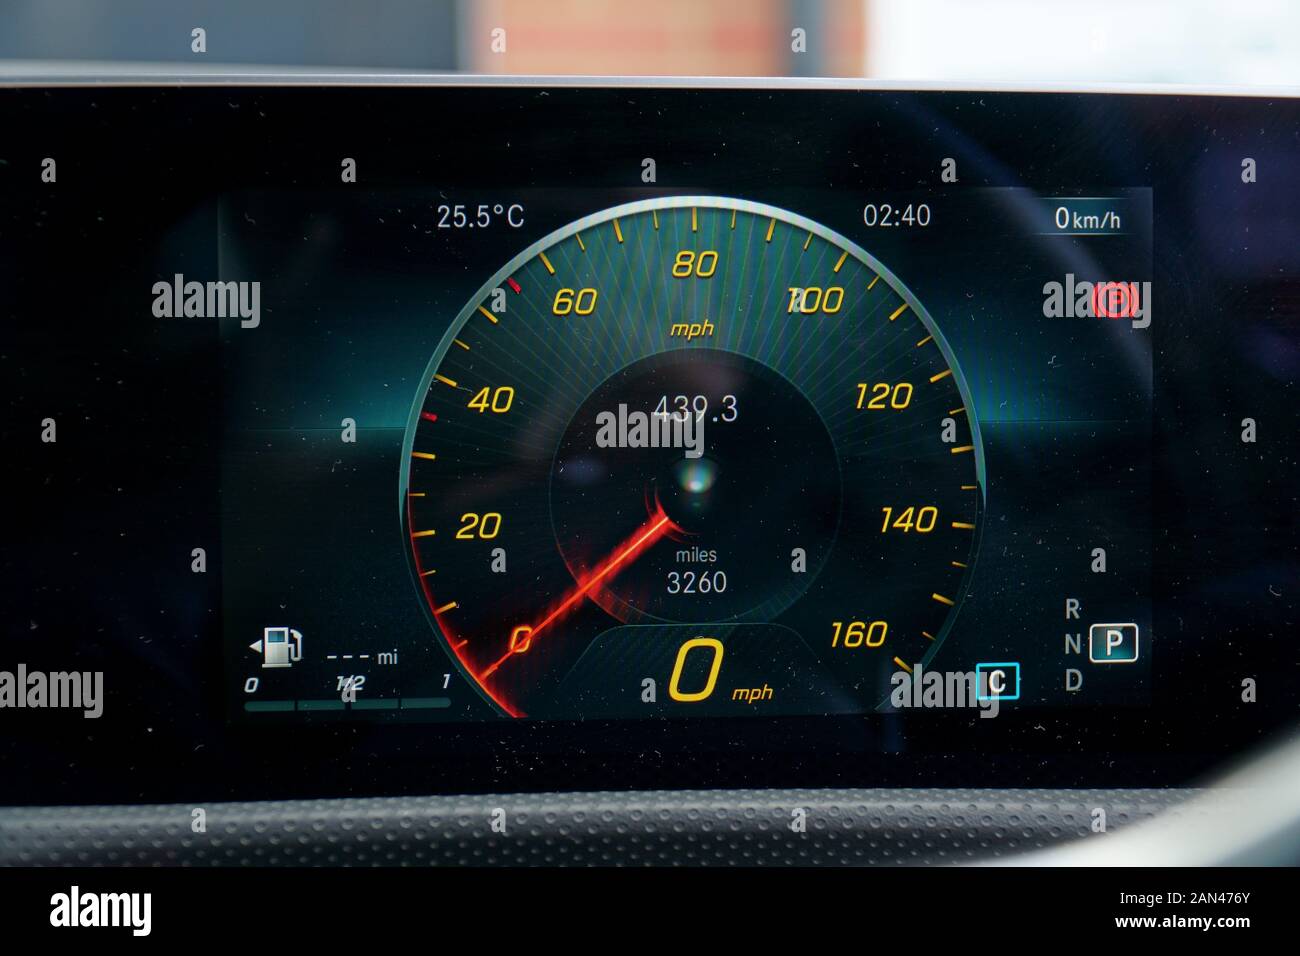 Digital Instrument screen in W177 Mercedes-Benz A-Class Stock Photo